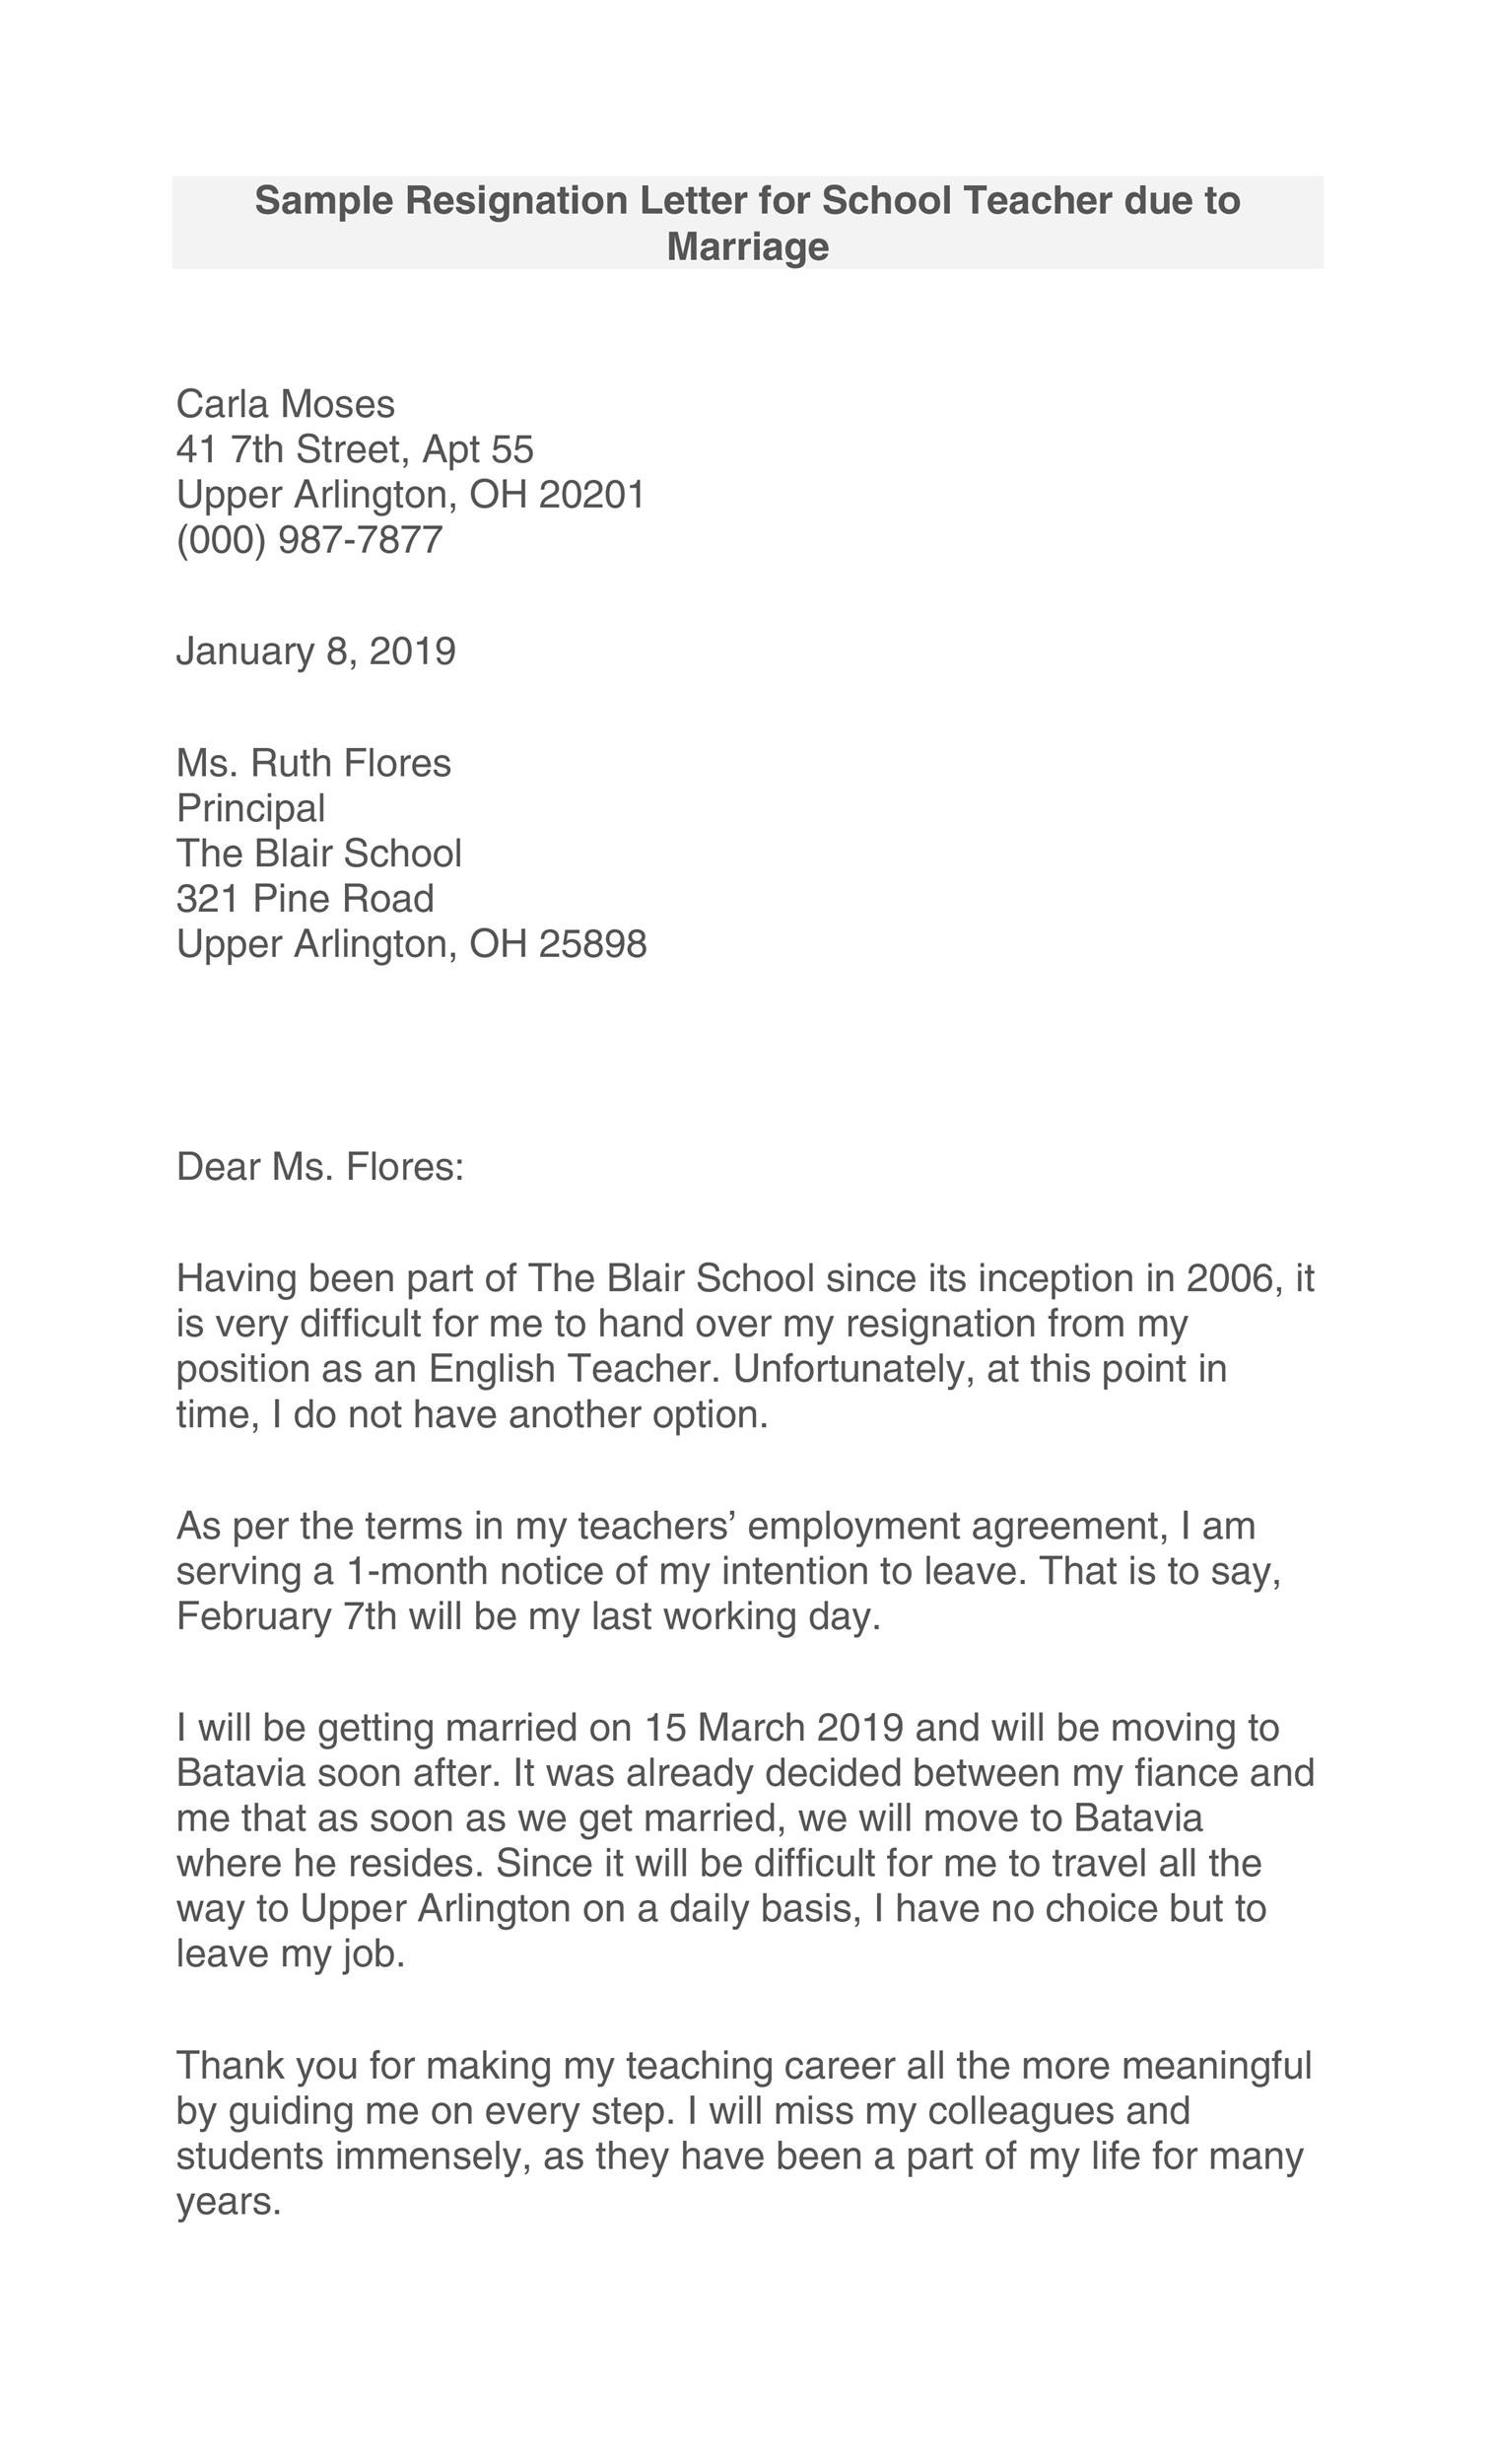 Sample Teacher Resignation Letter To Principal from templatelab.com